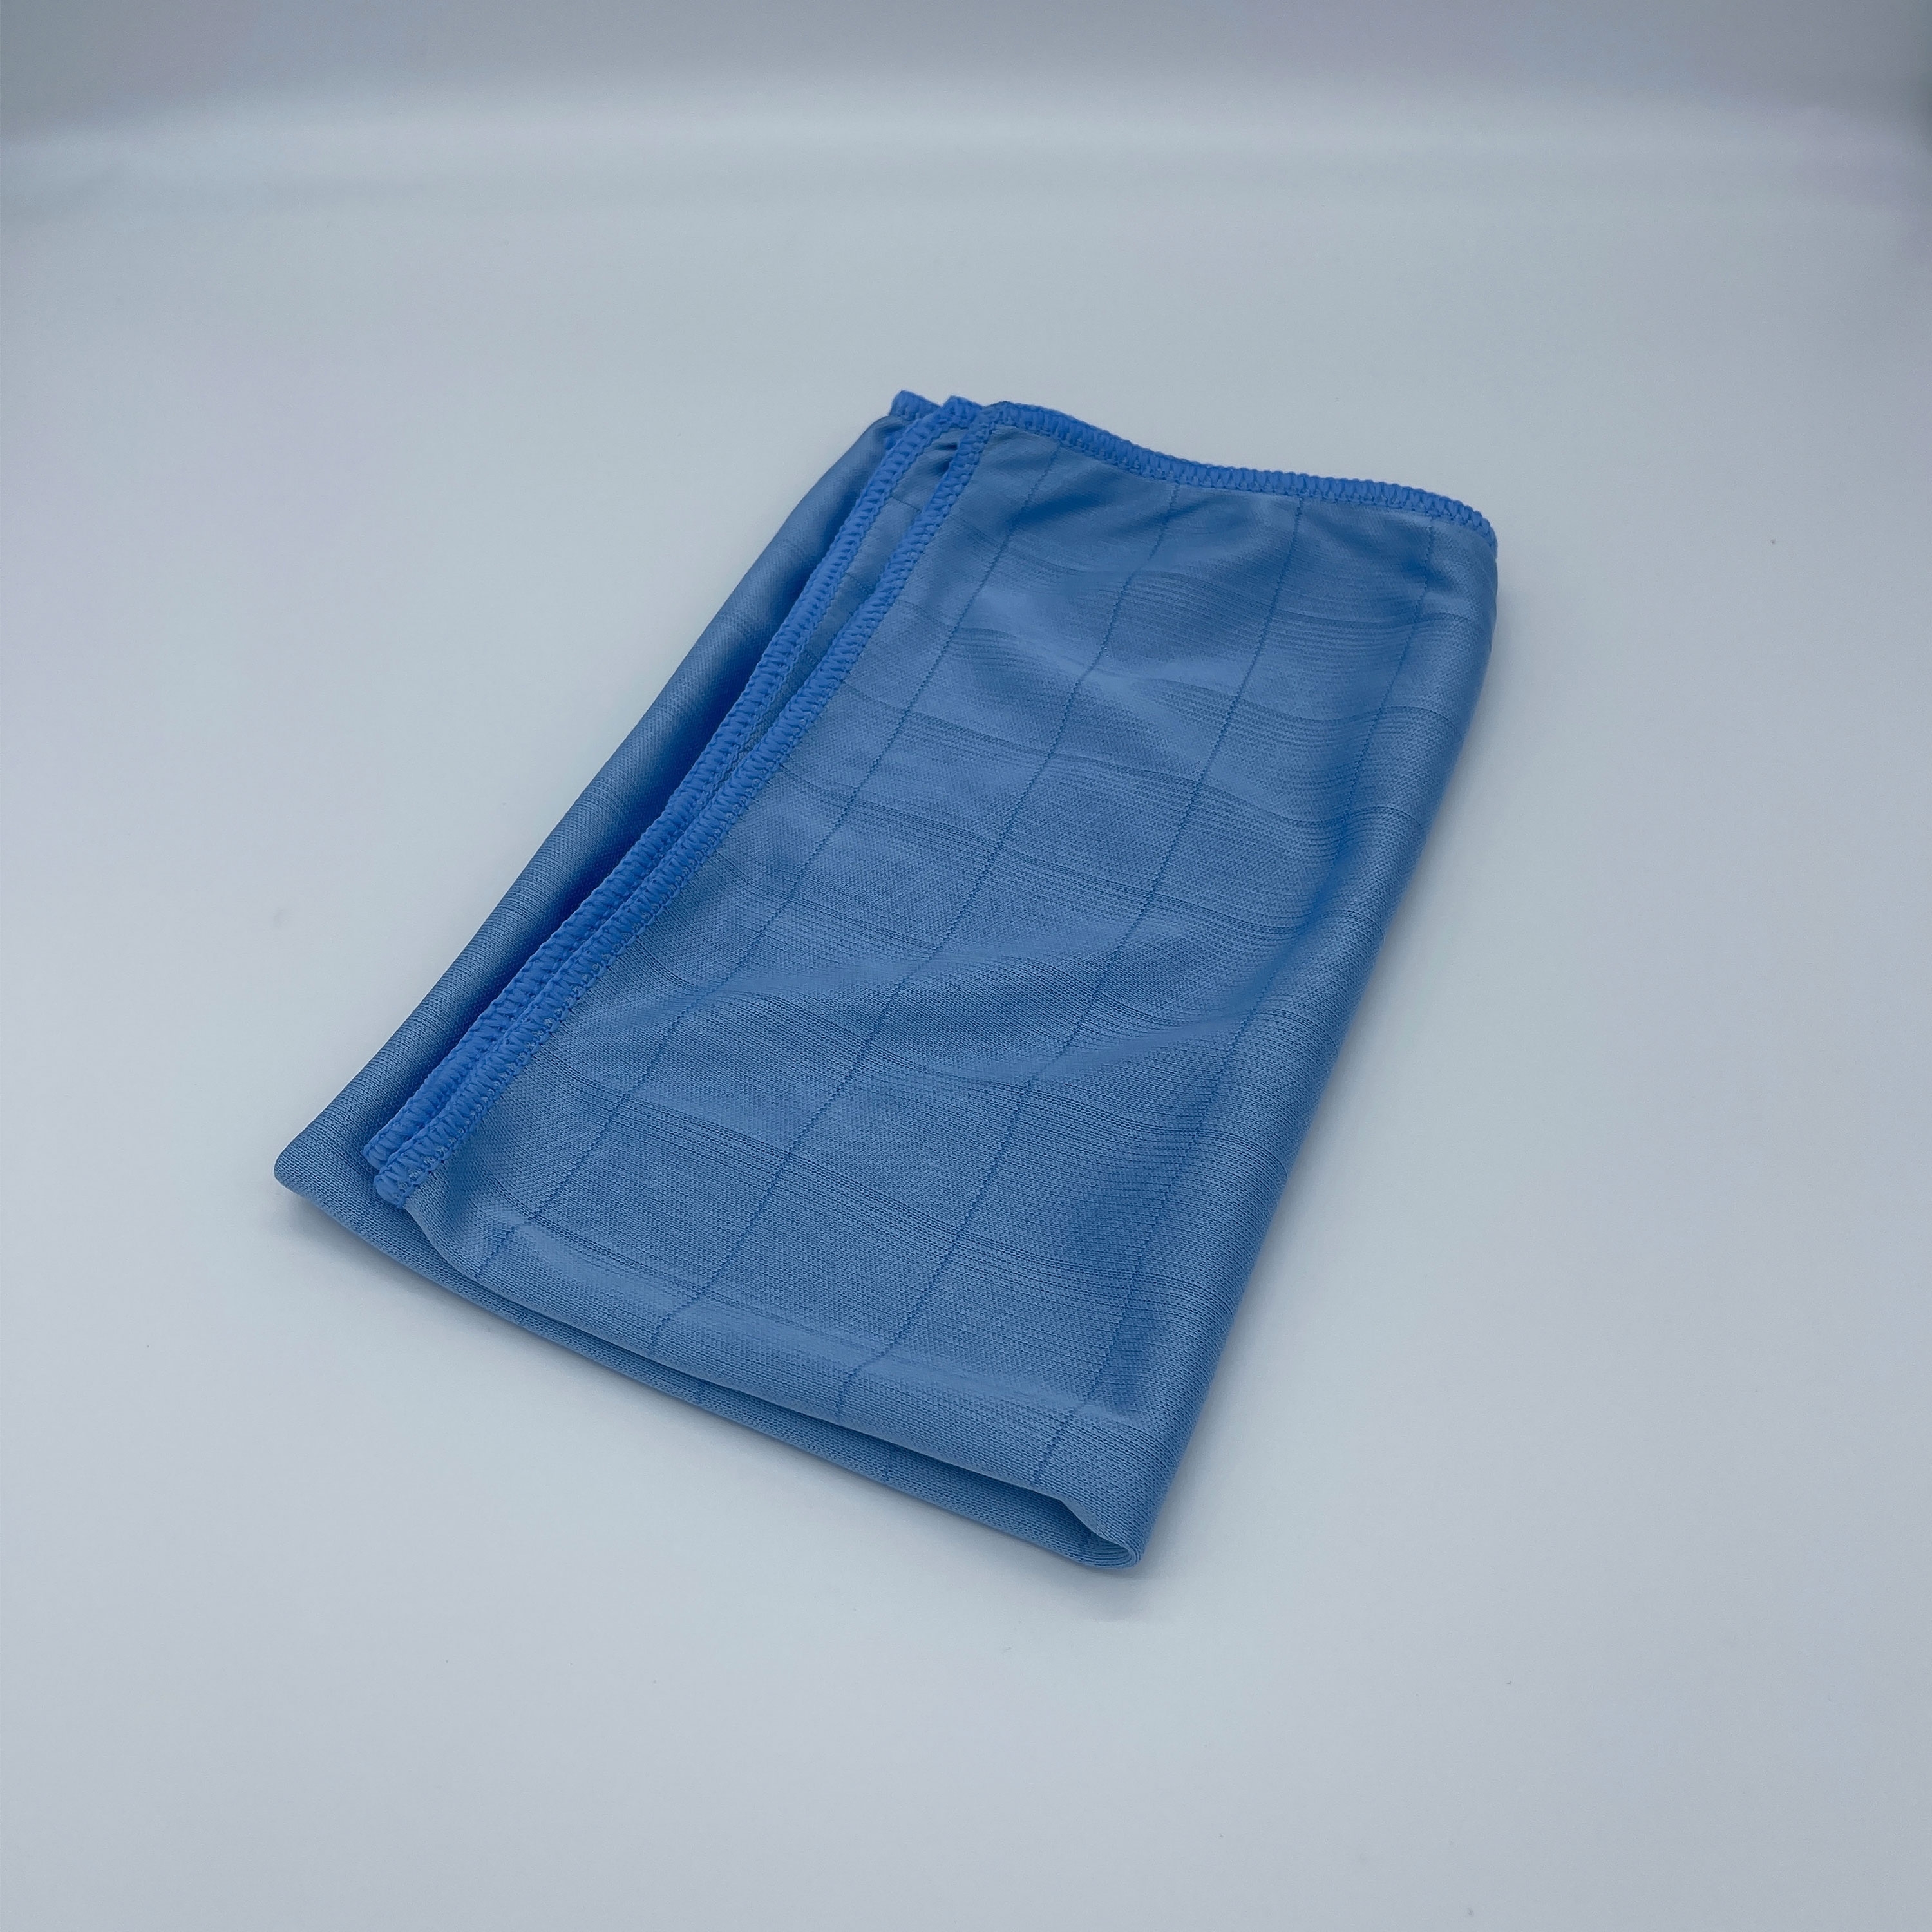 Mundus Microfiber Dish Cloth in Brown and Optic Blue